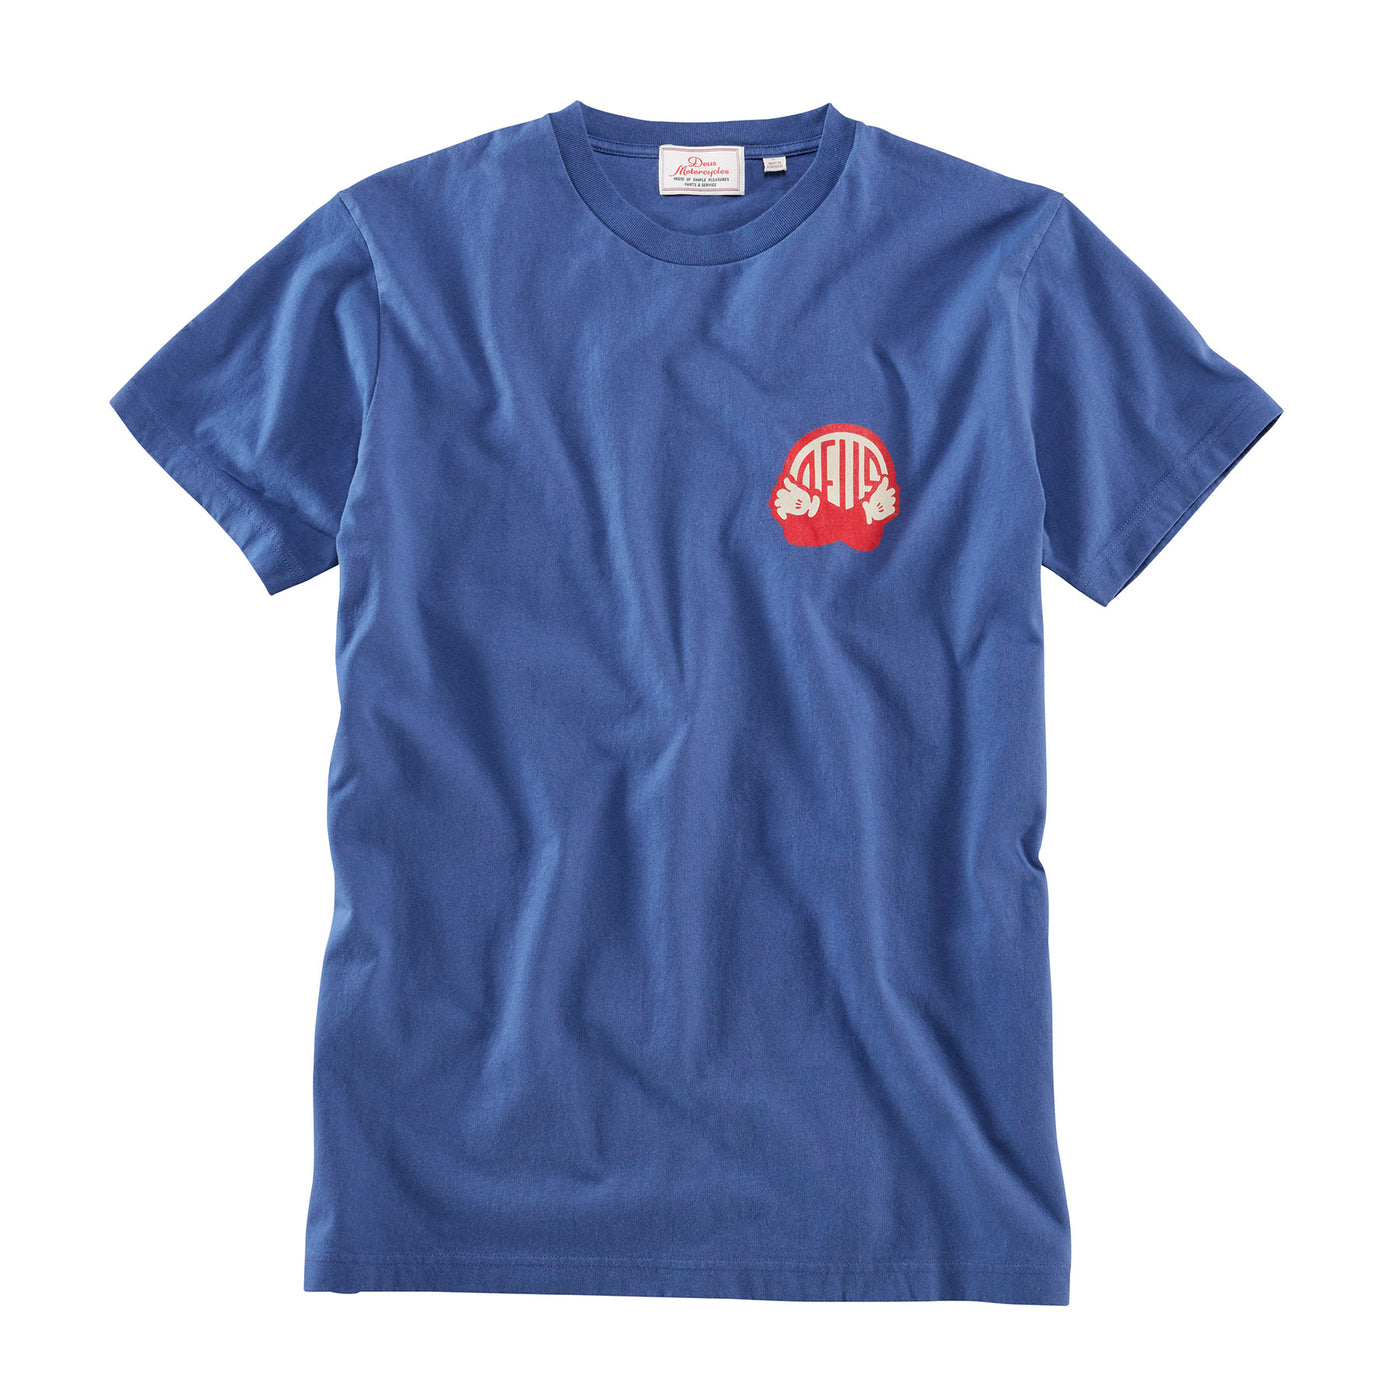 Deus T-Shirt Rhinestone Blue